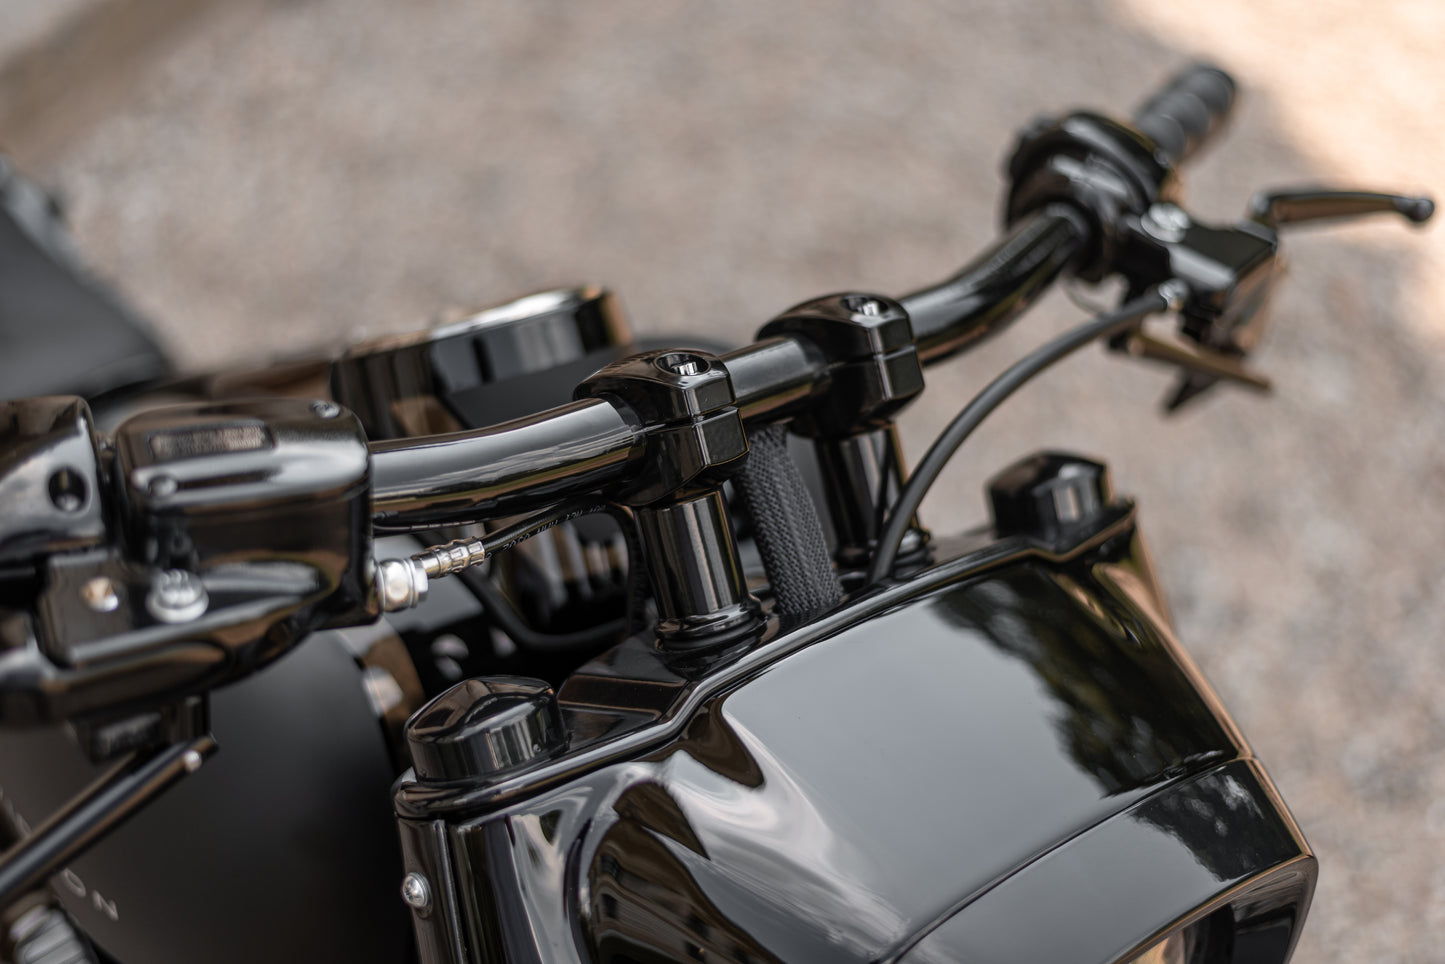 Zoomed Harley Davidson motorcycle with Killer Custom "Avenger" fat drag handlebar from above blurry background